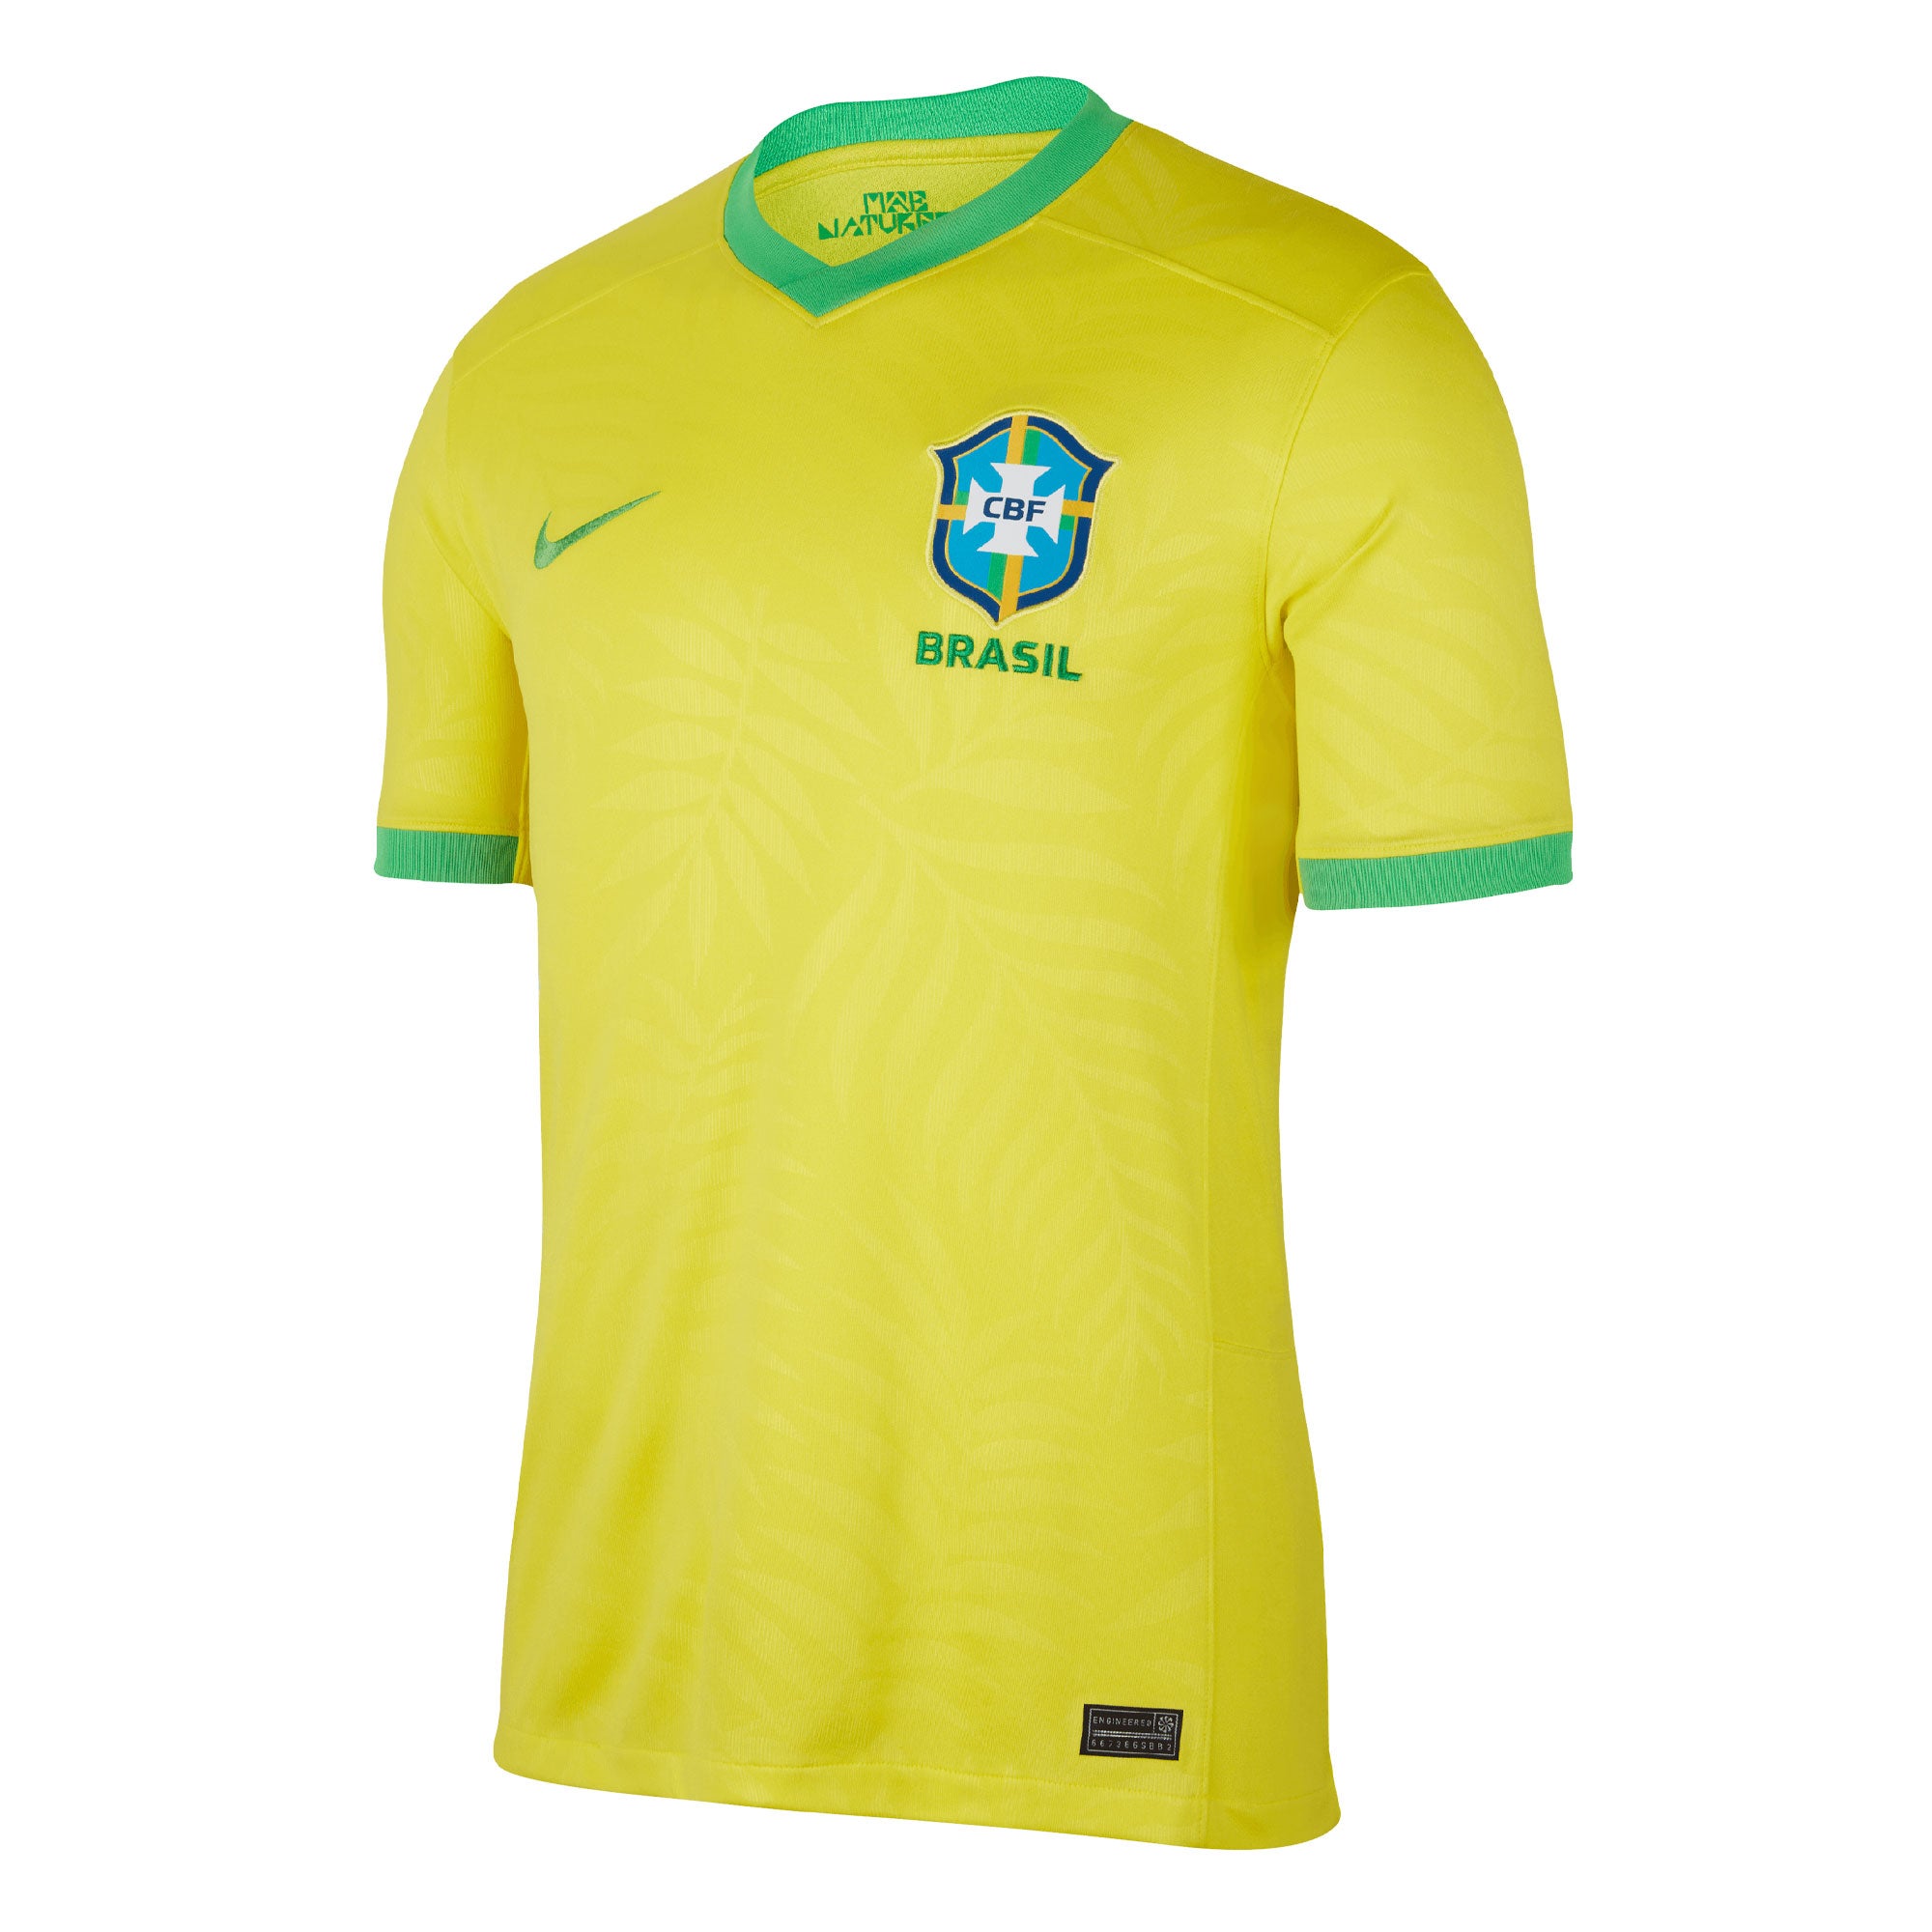 Nike Mens Brazil Football Jacket Size M Gold / Green (s)